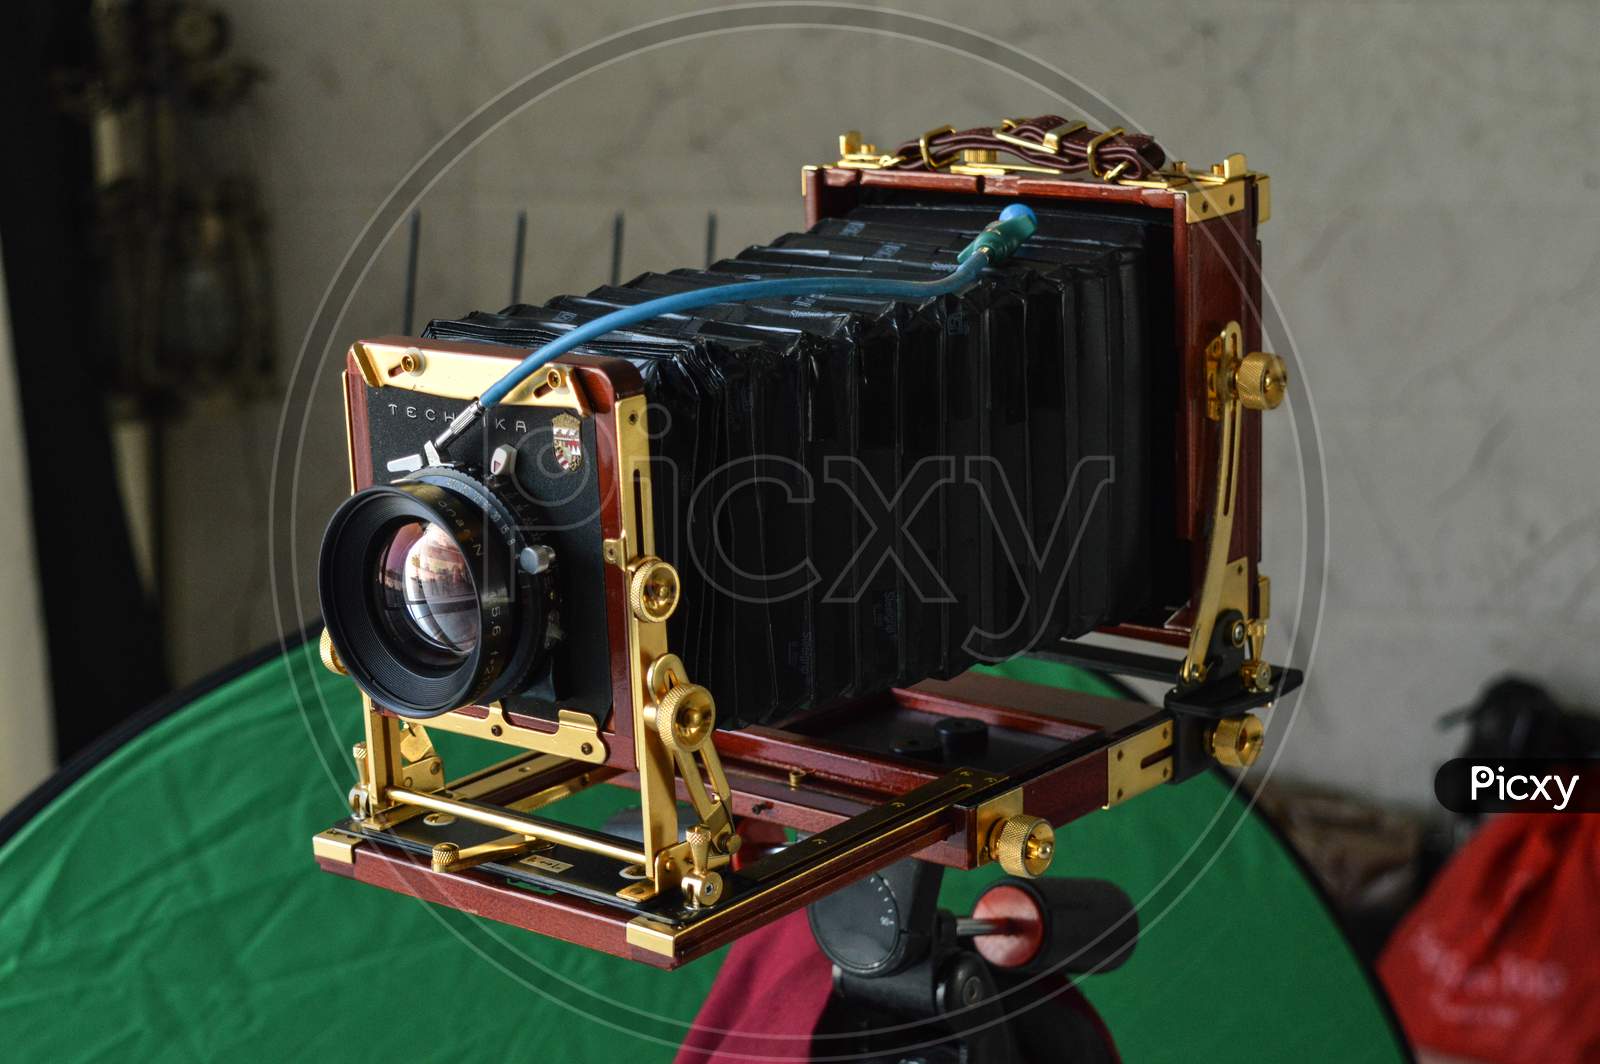 A Master Technika Antic, Retro Camera 4 X 5 Classic Look Isolated On The Tripod